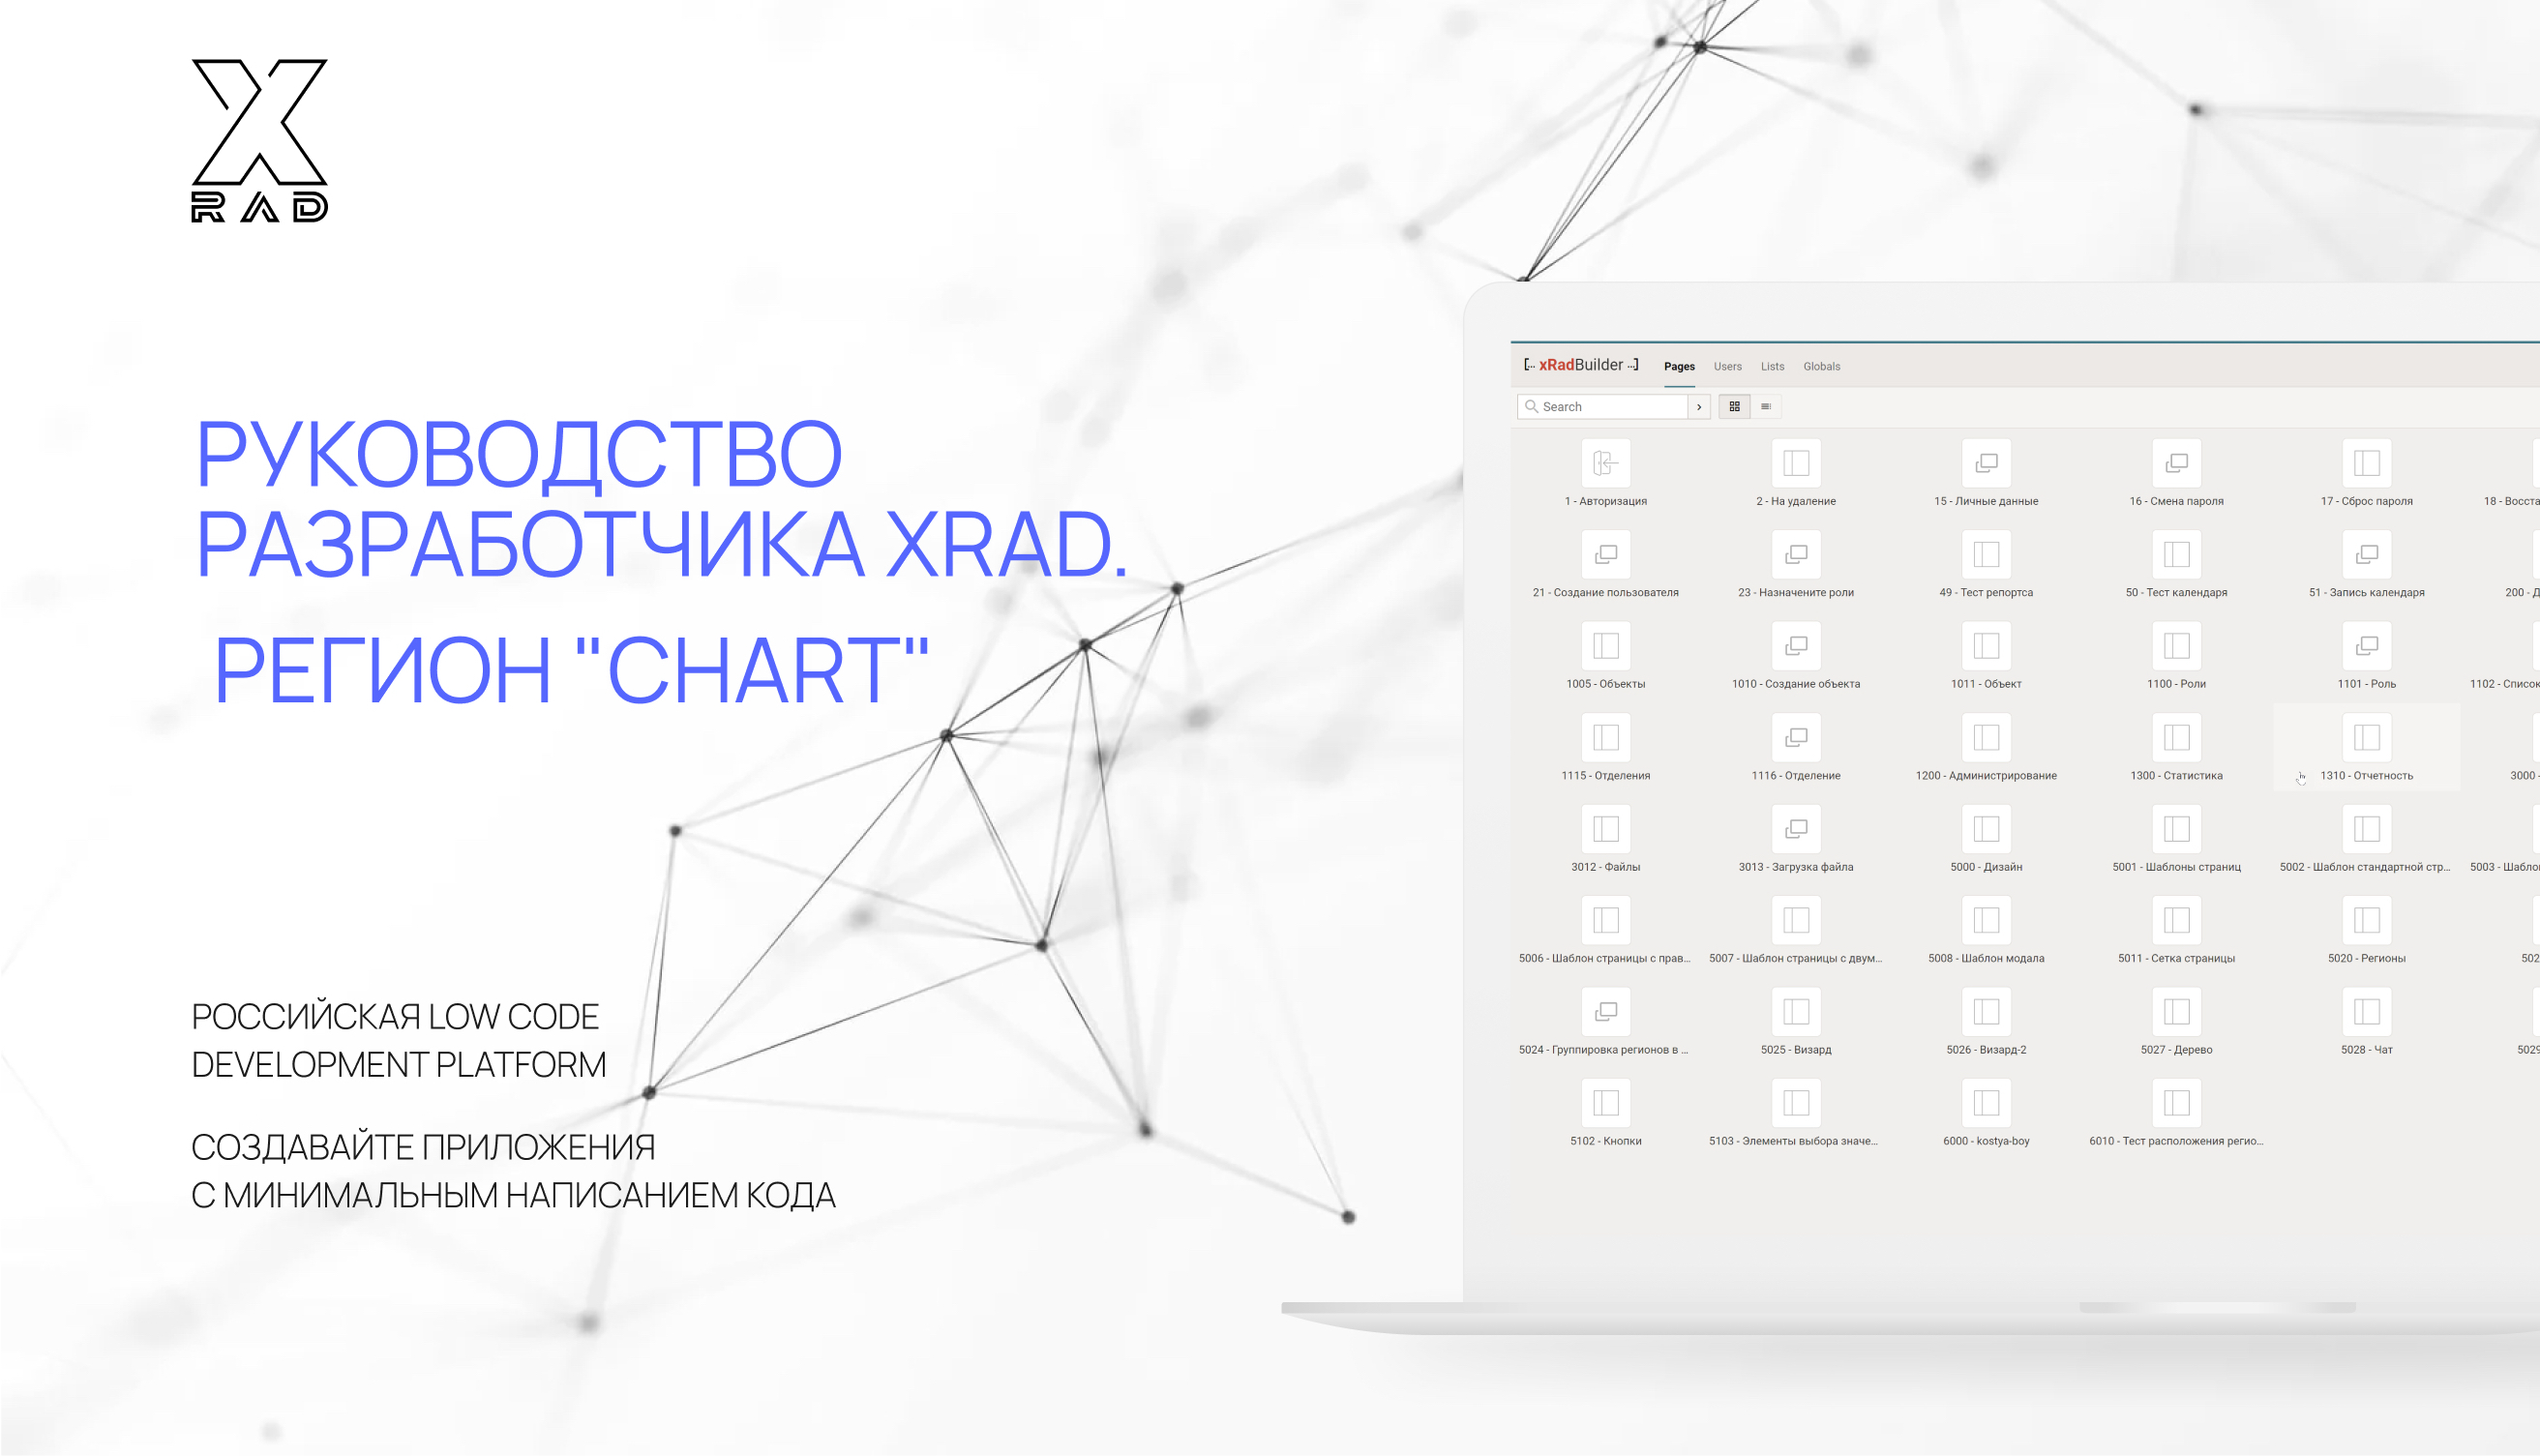 Руководство разработчика XRAD. Регион "Chart"